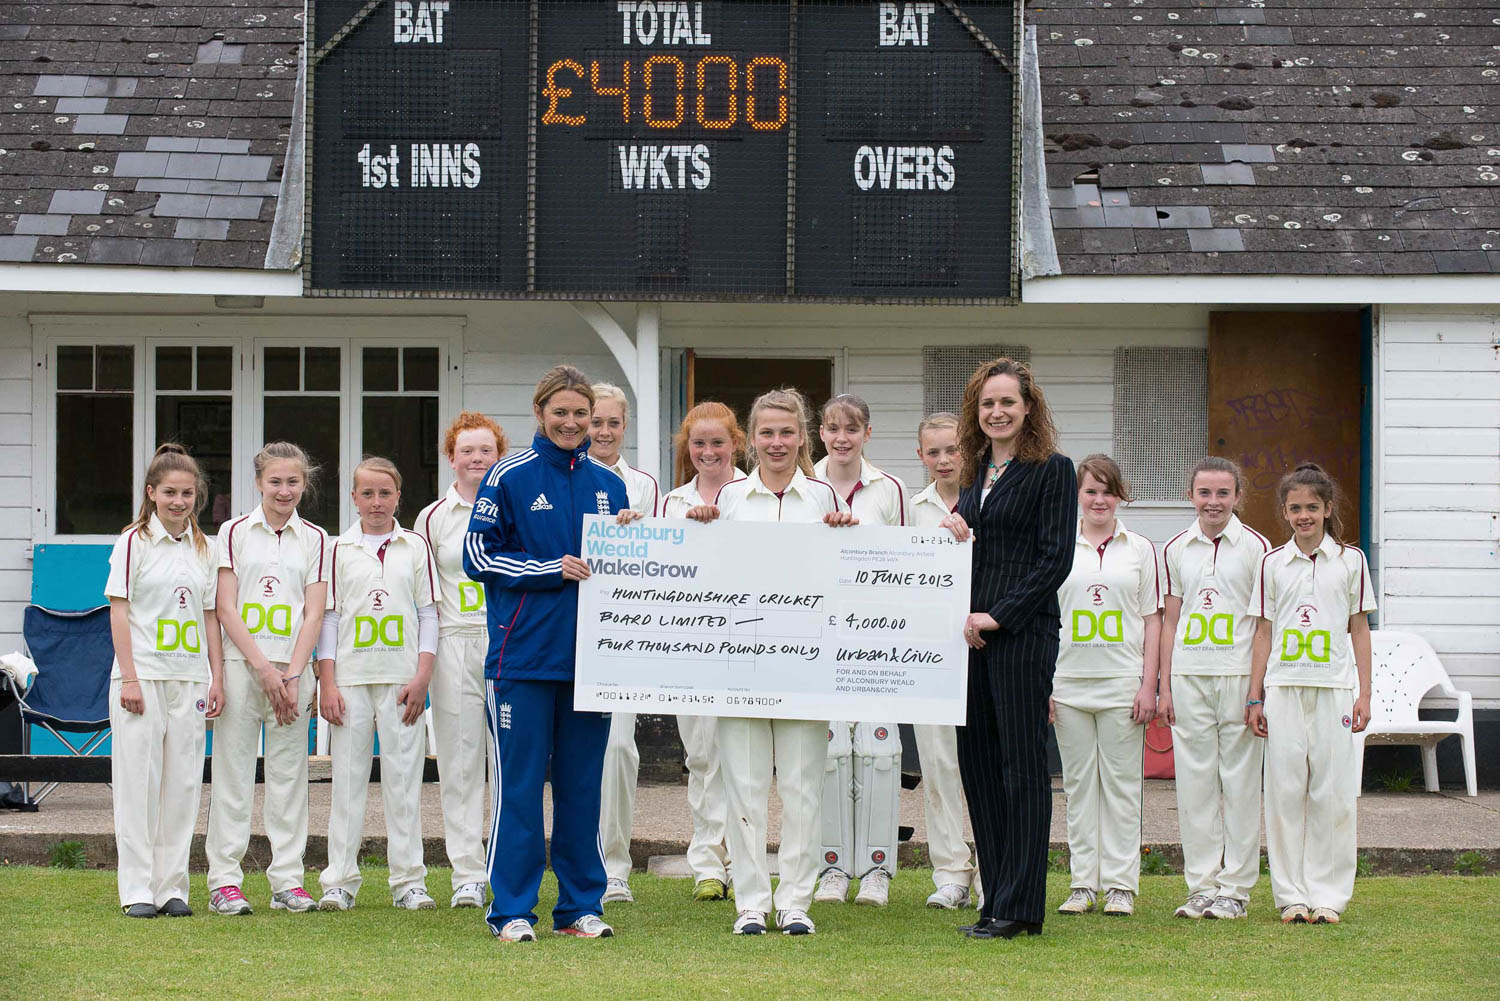 Sponsorship Deal For Hunts Girls Cricket Club.